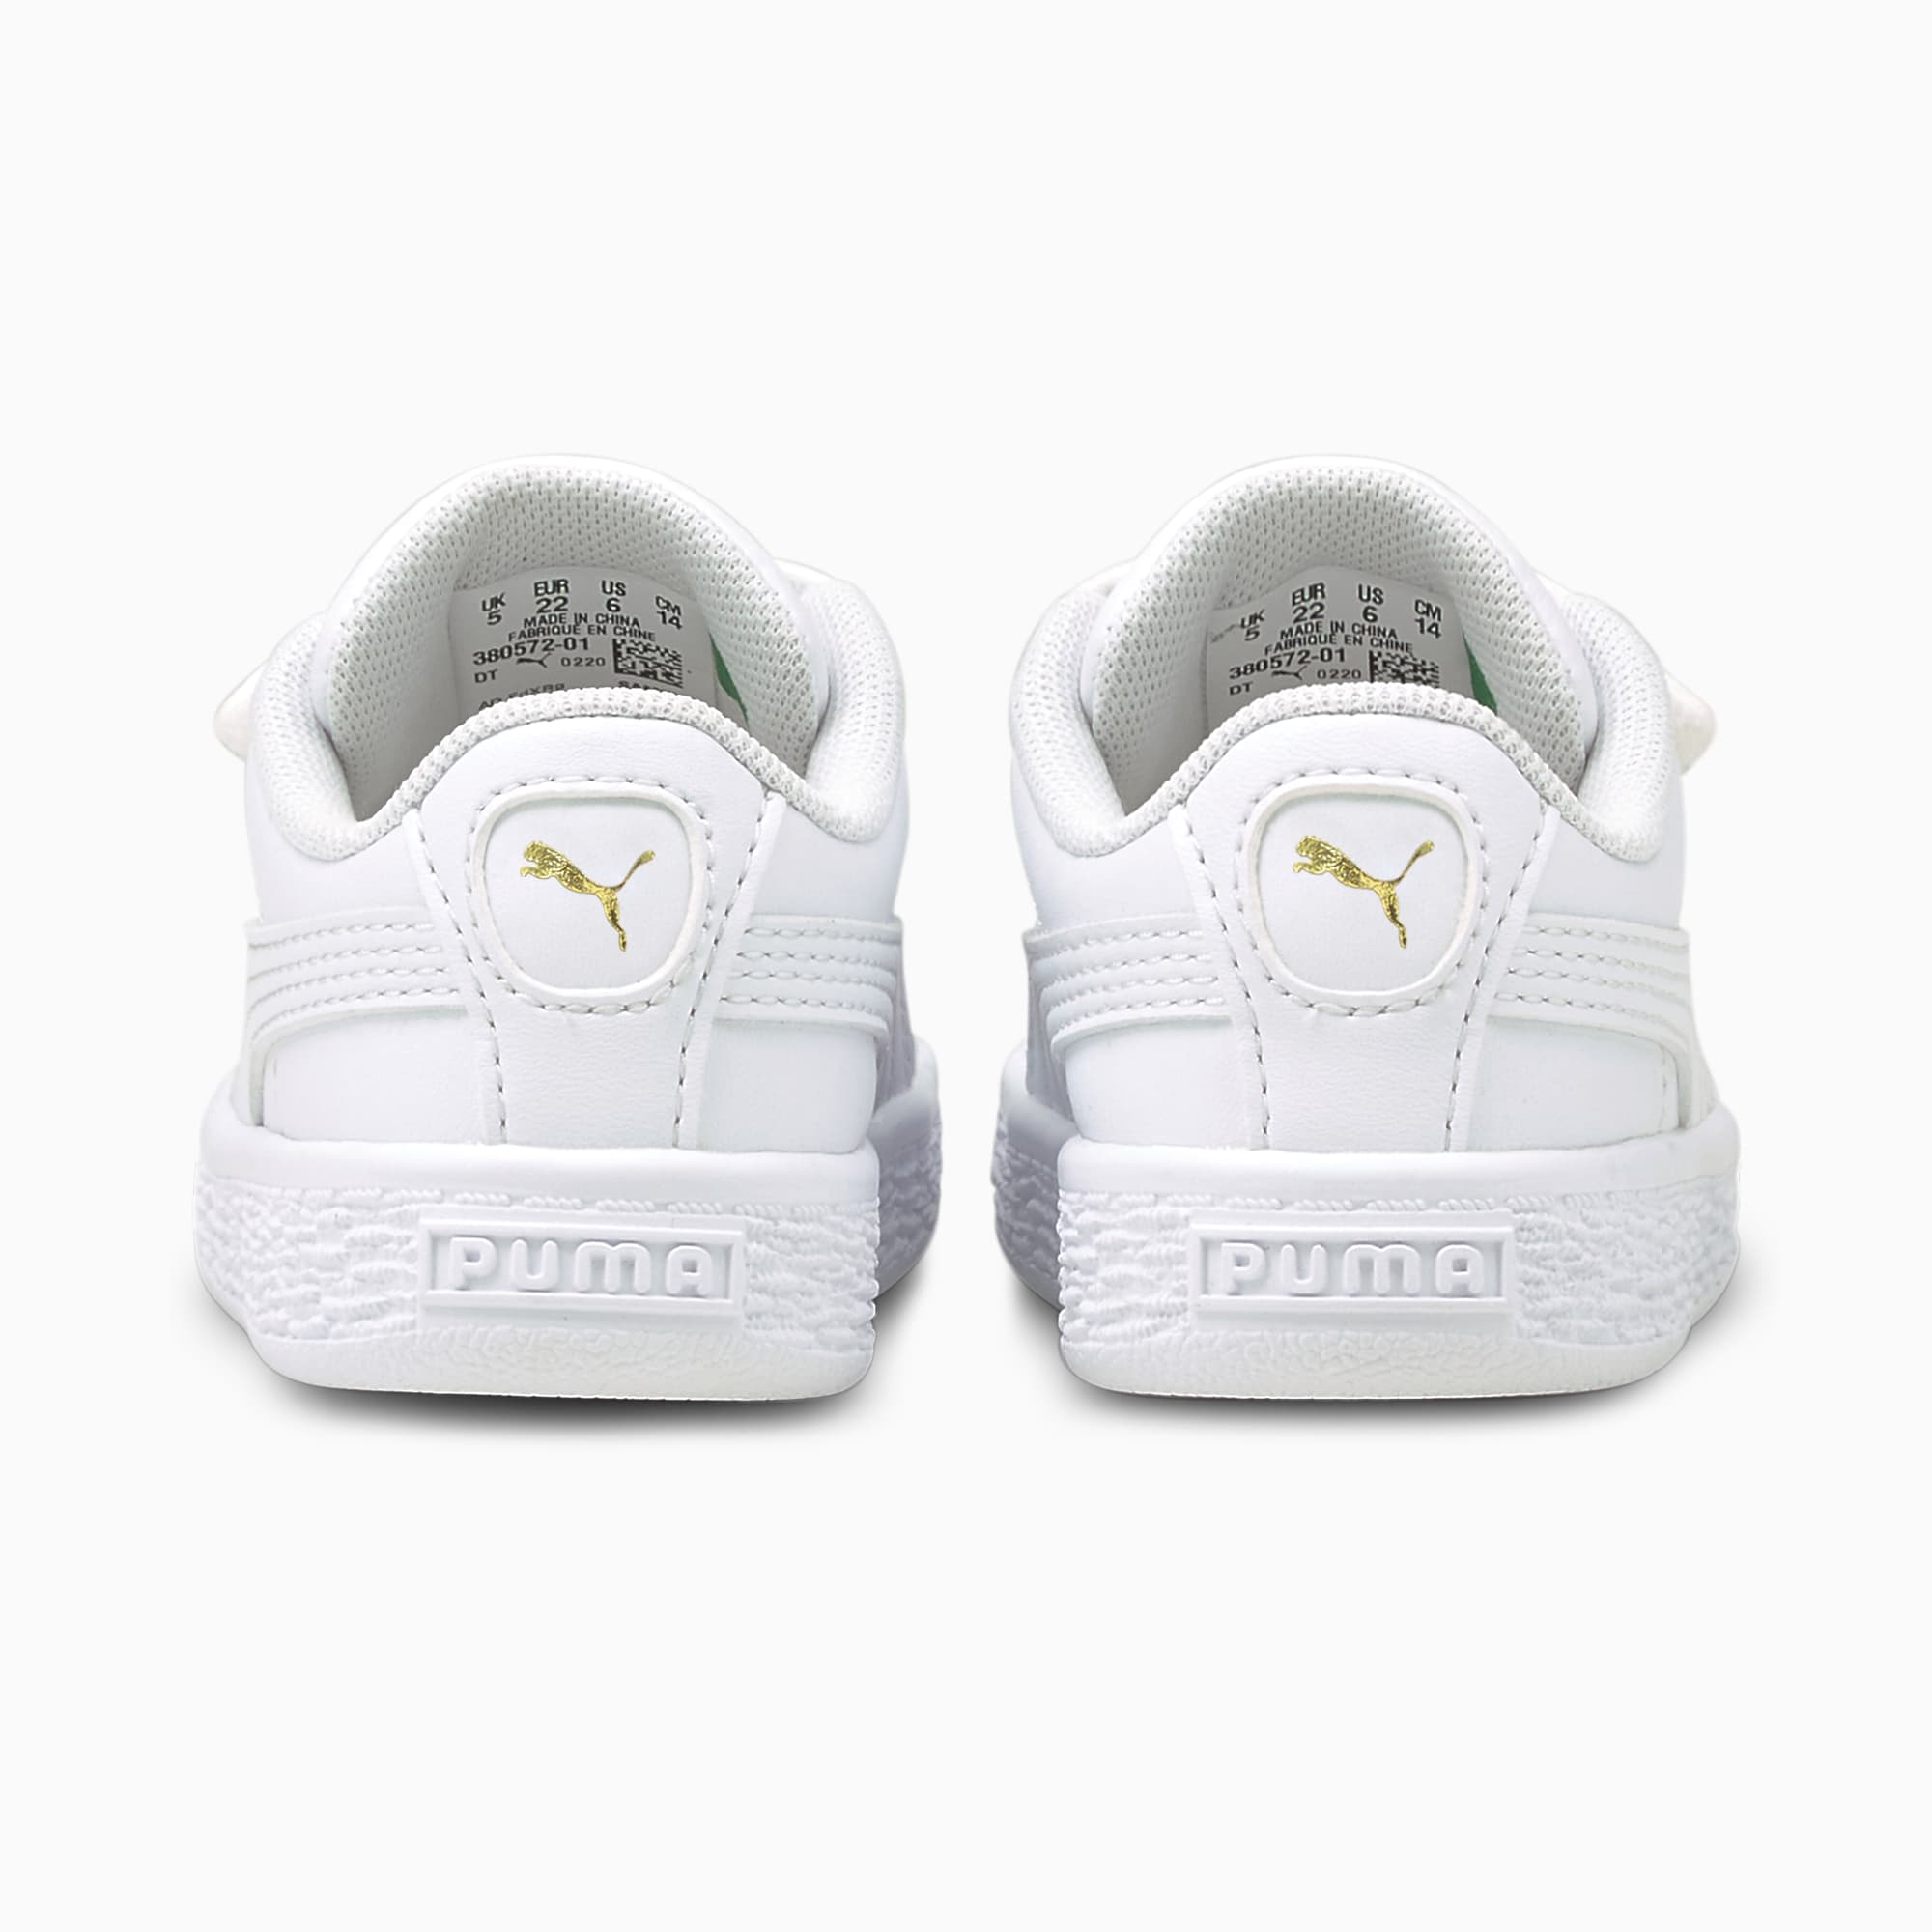 PUMA Basket Classic Xxi Babies' Trainers, White, Size 19, Shoes